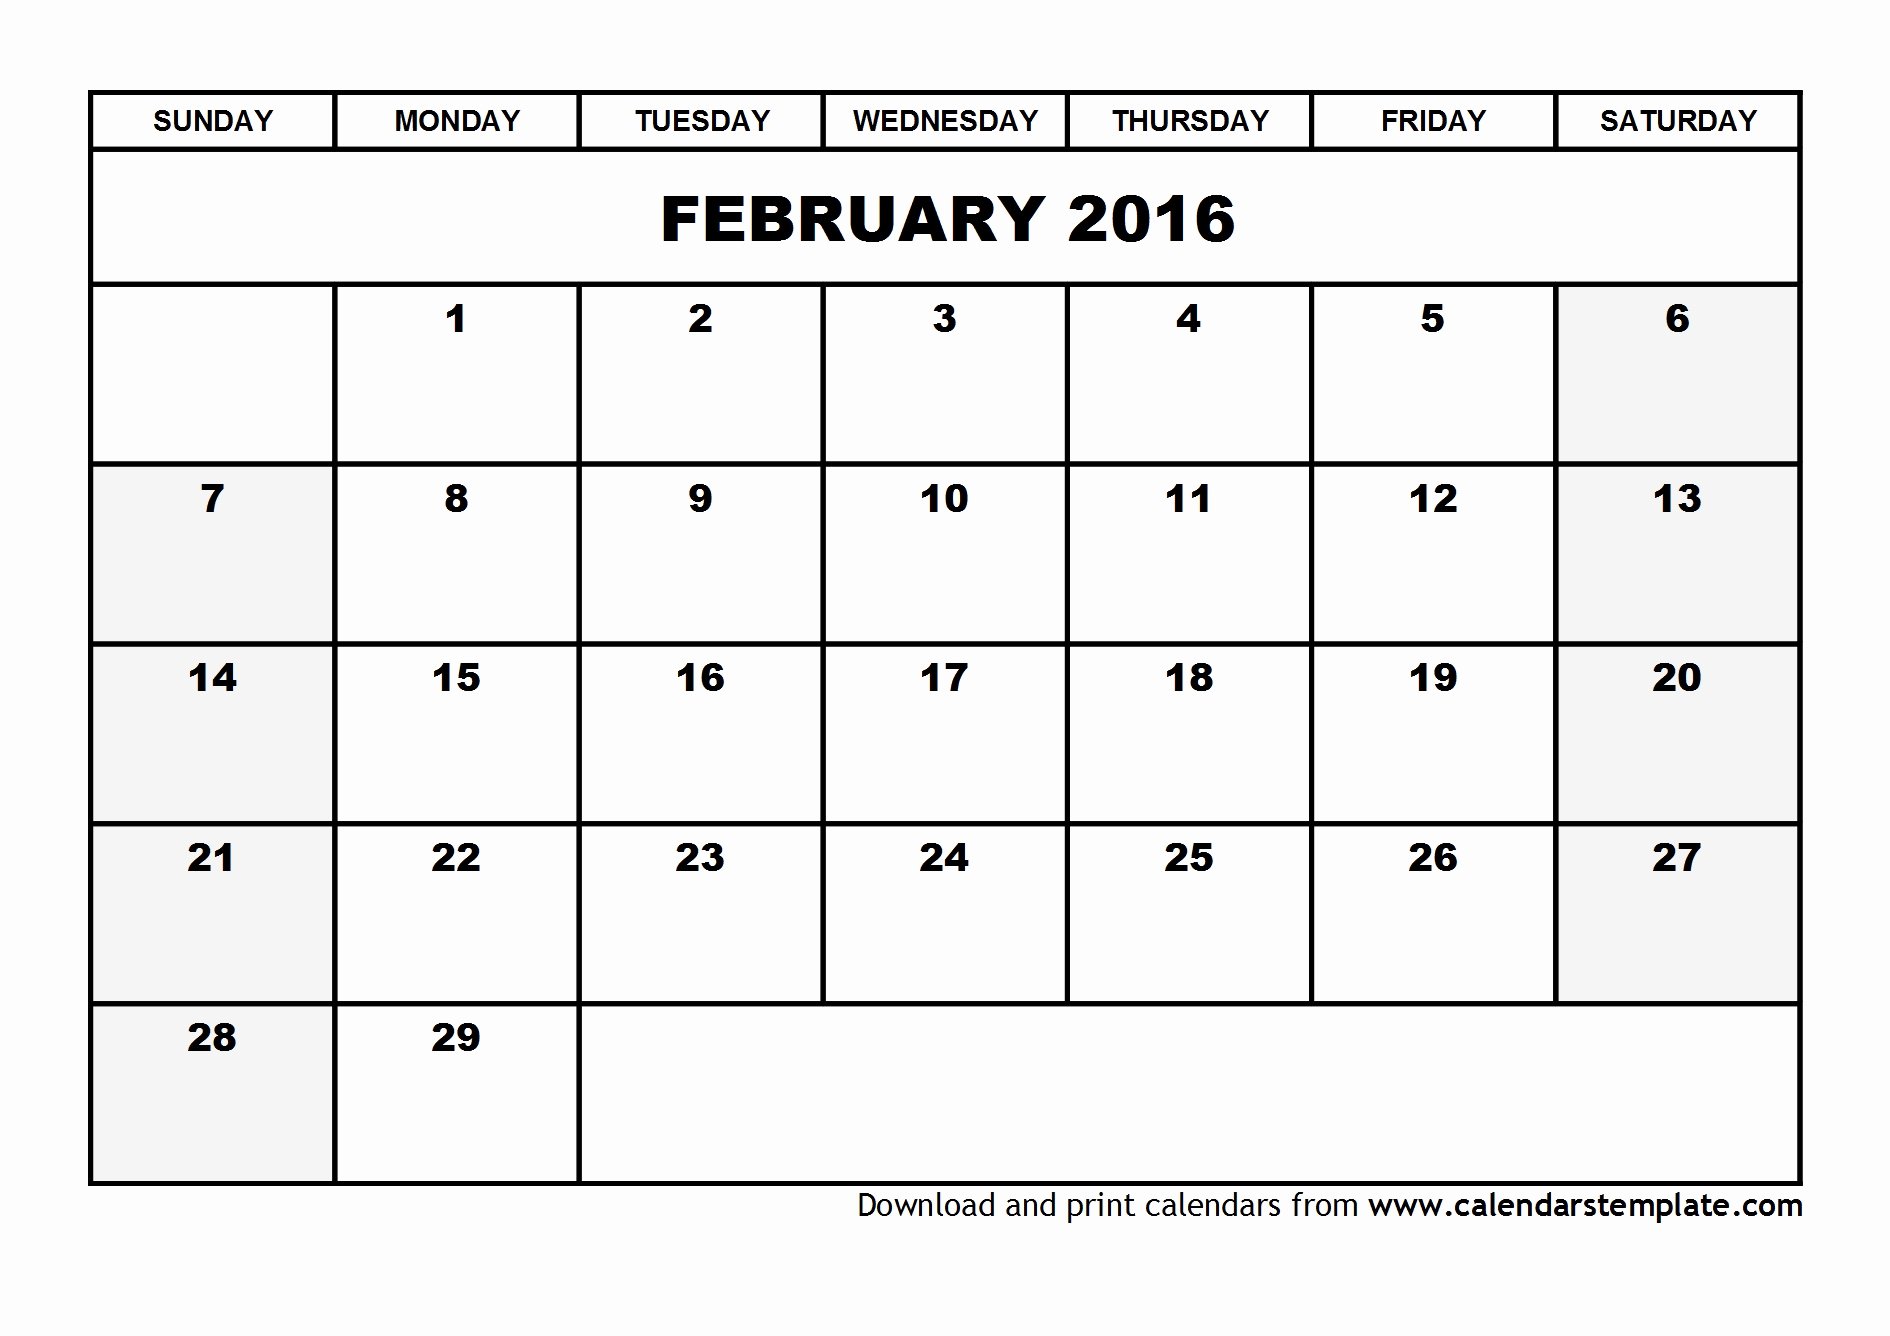 Blank Calendar Template 2016 Awesome February 2016 Calendar Template